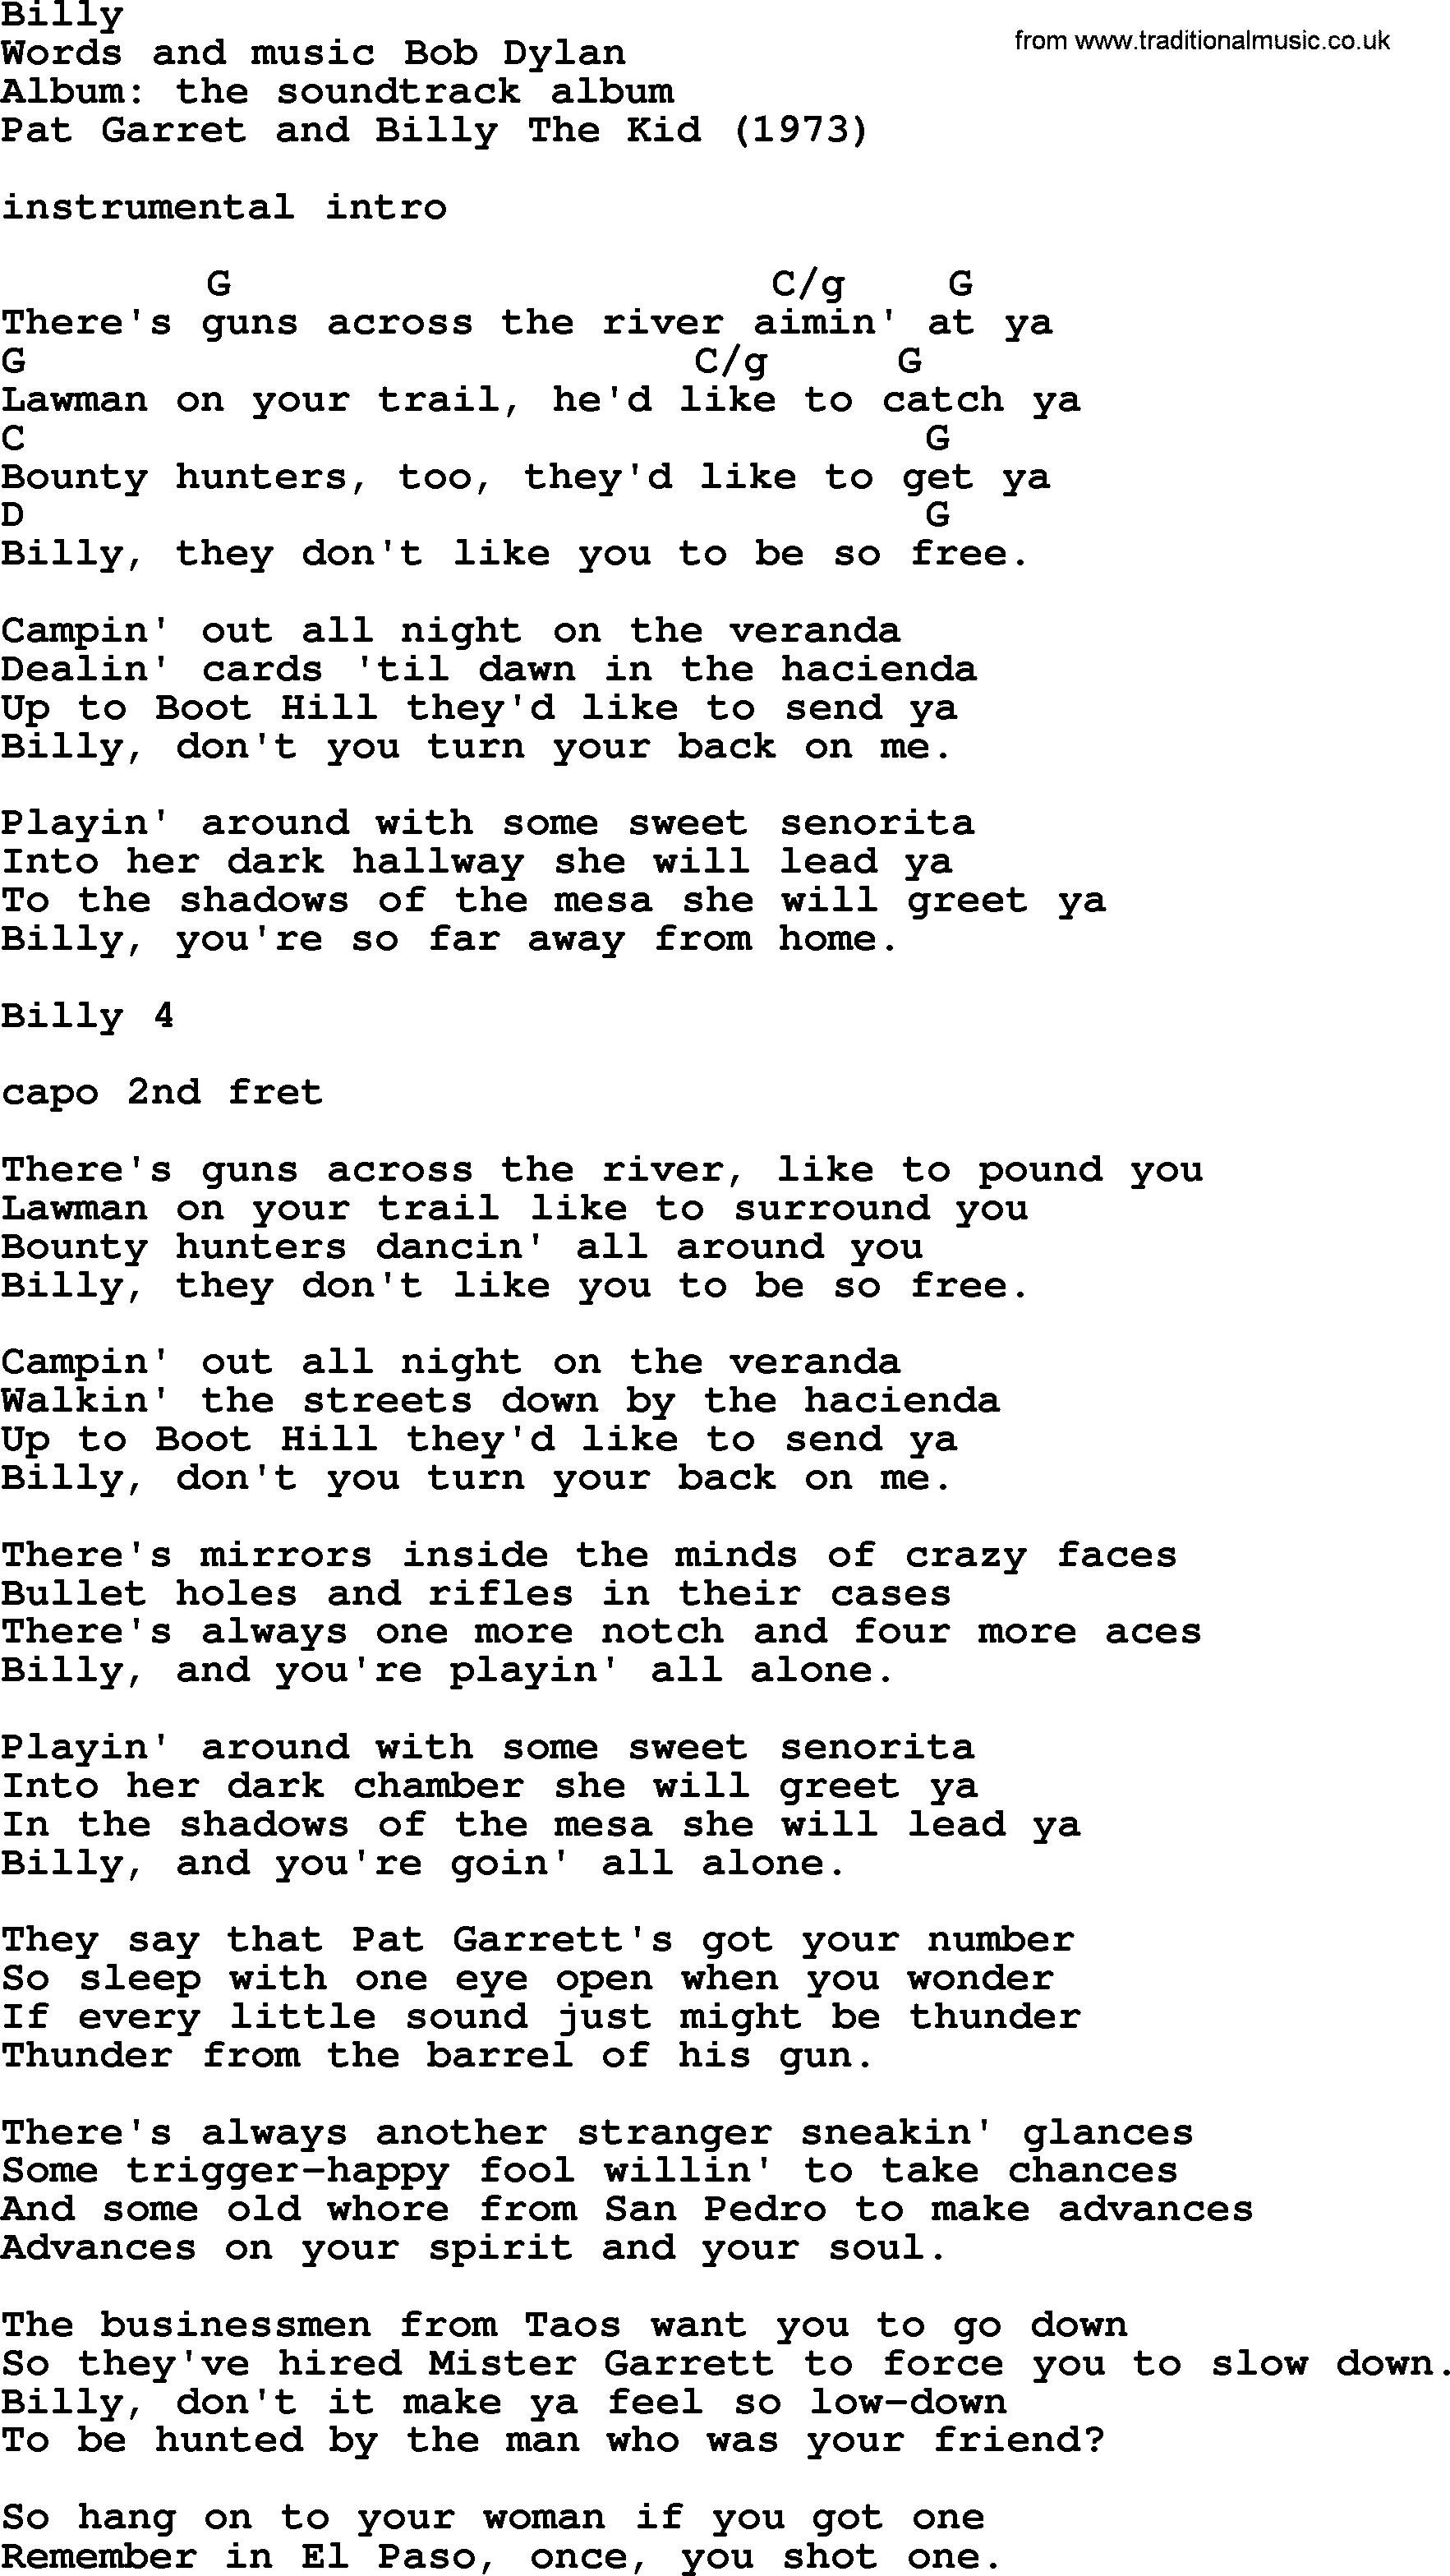 Bob Dylan song, lyrics with chords - Billy